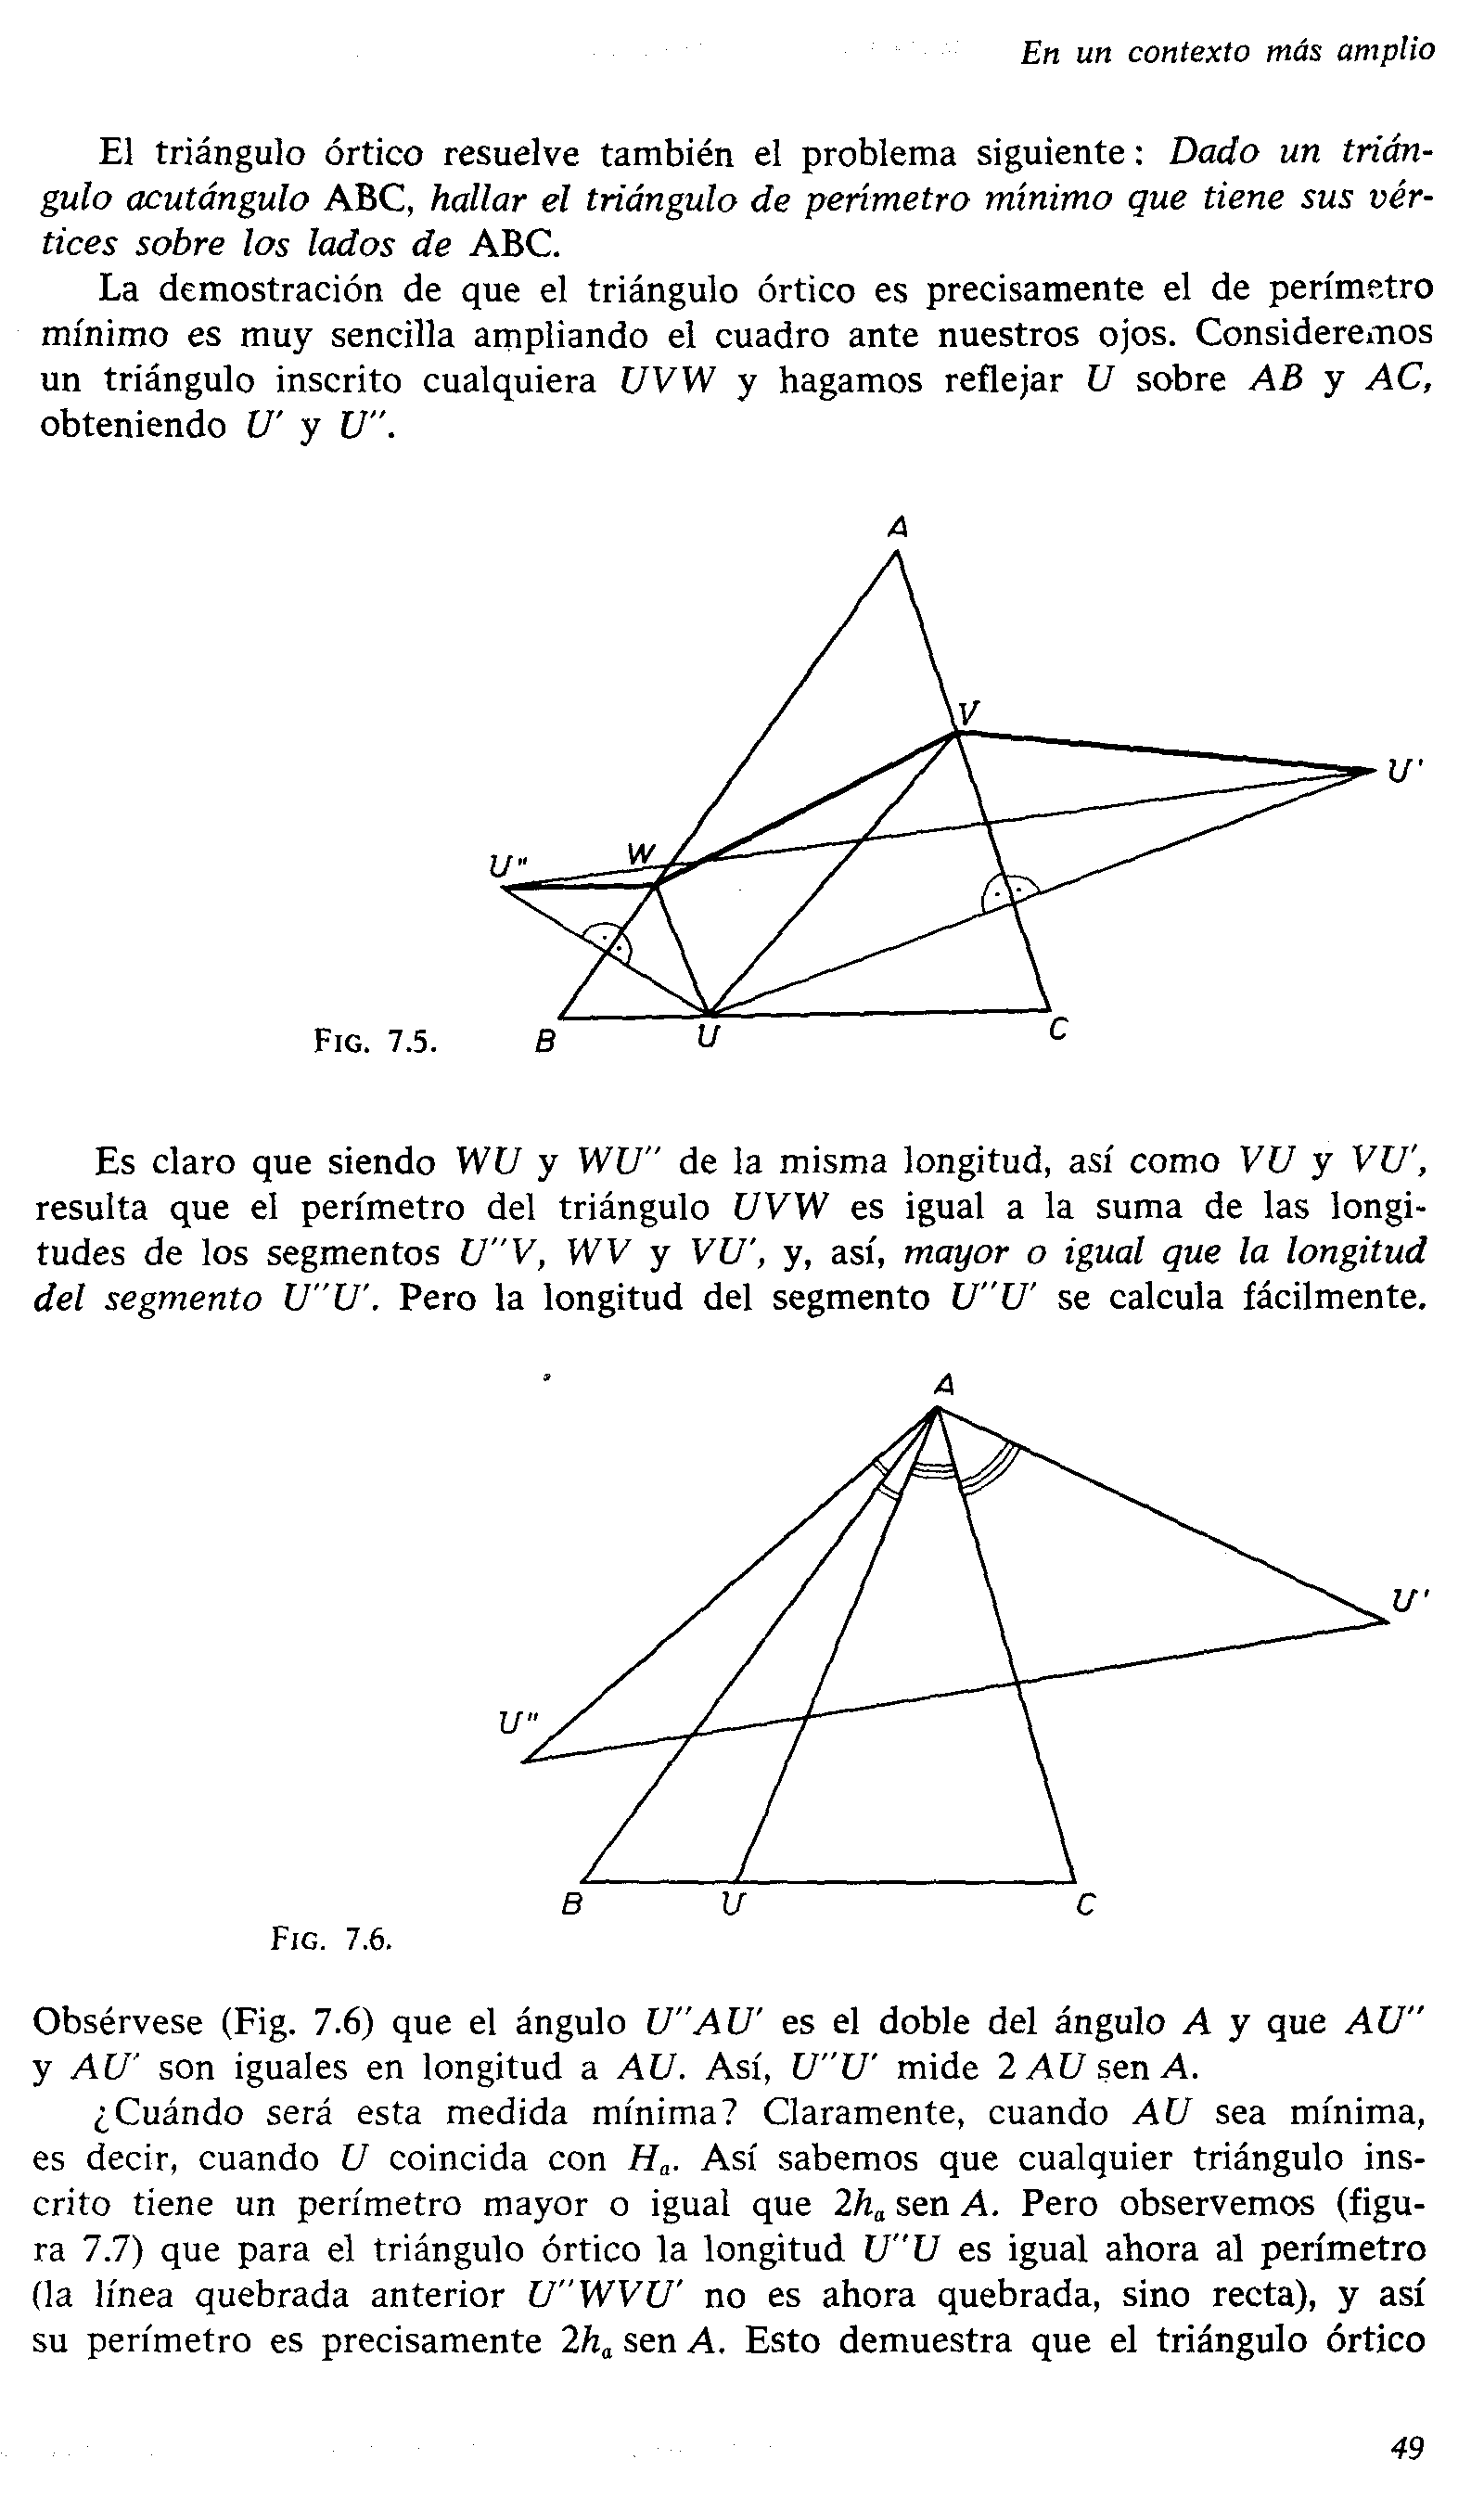 Graphics (p.4-1)